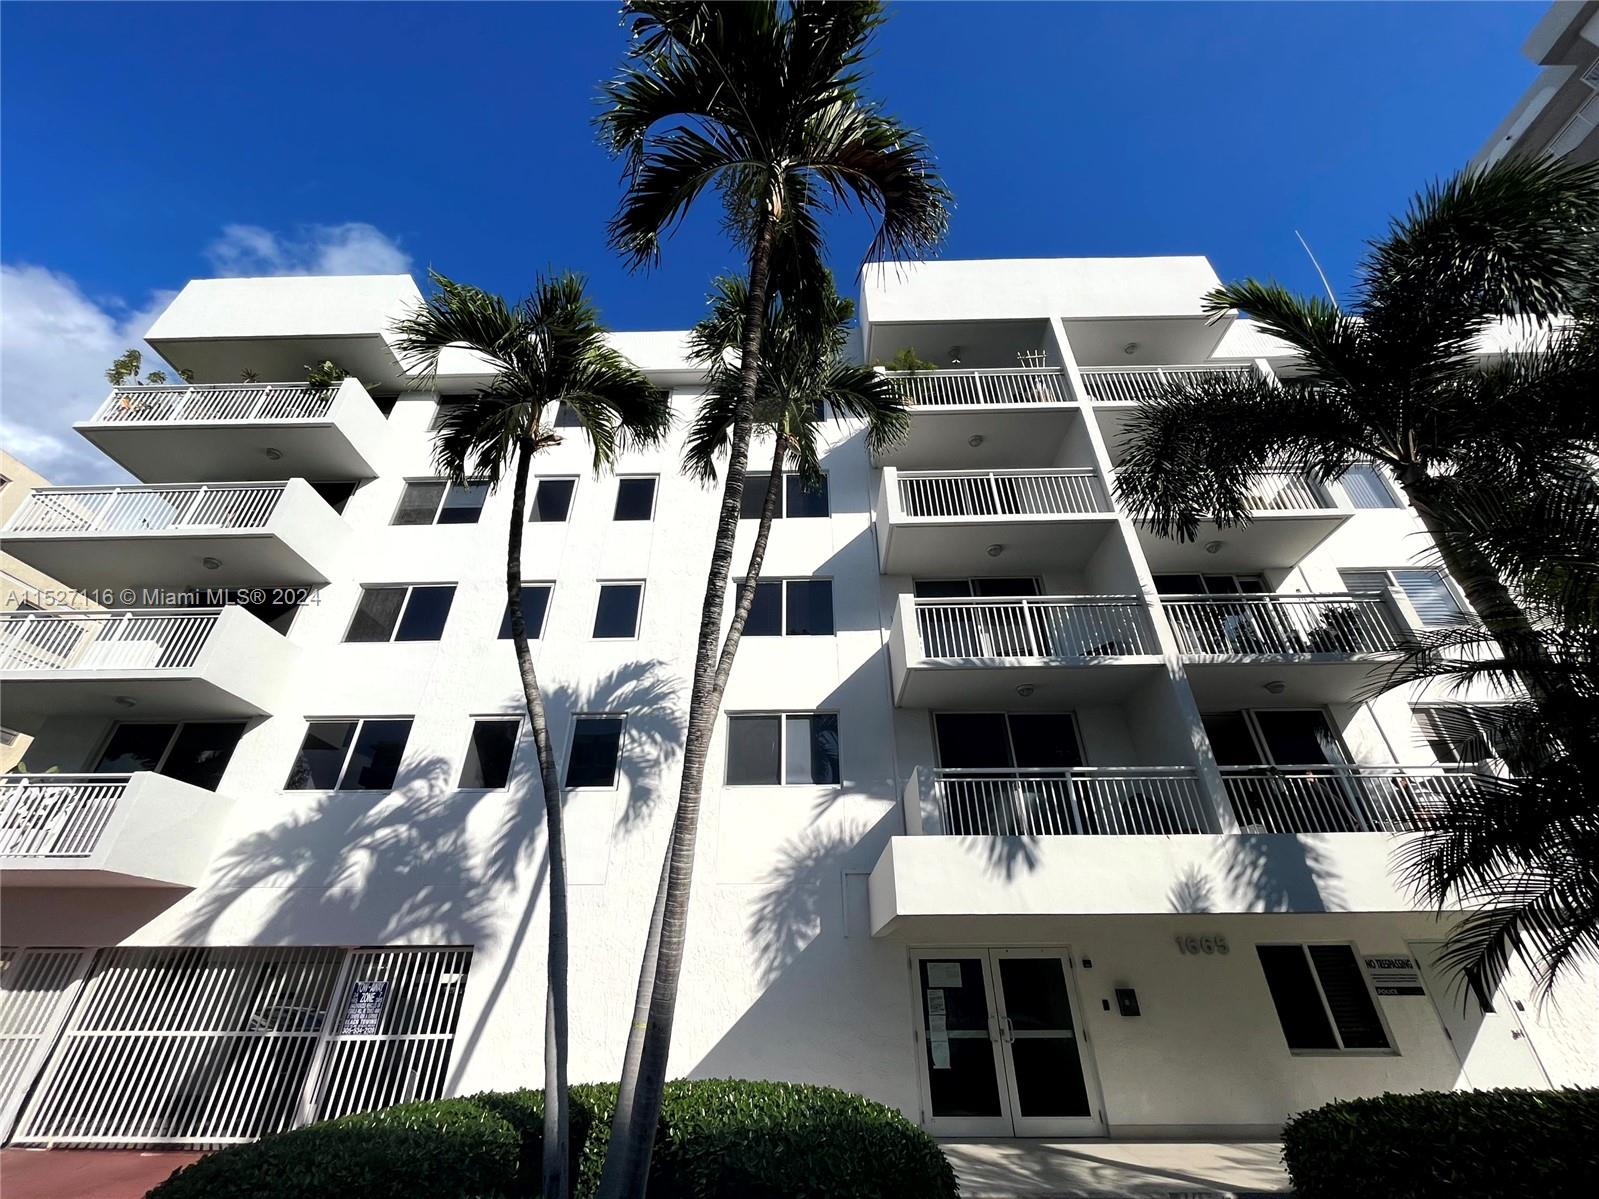 Property for Sale at 1665 Bay Rd 425, Miami Beach, Miami-Dade County, Florida - Bedrooms: 2 
Bathrooms: 2  - $515,000